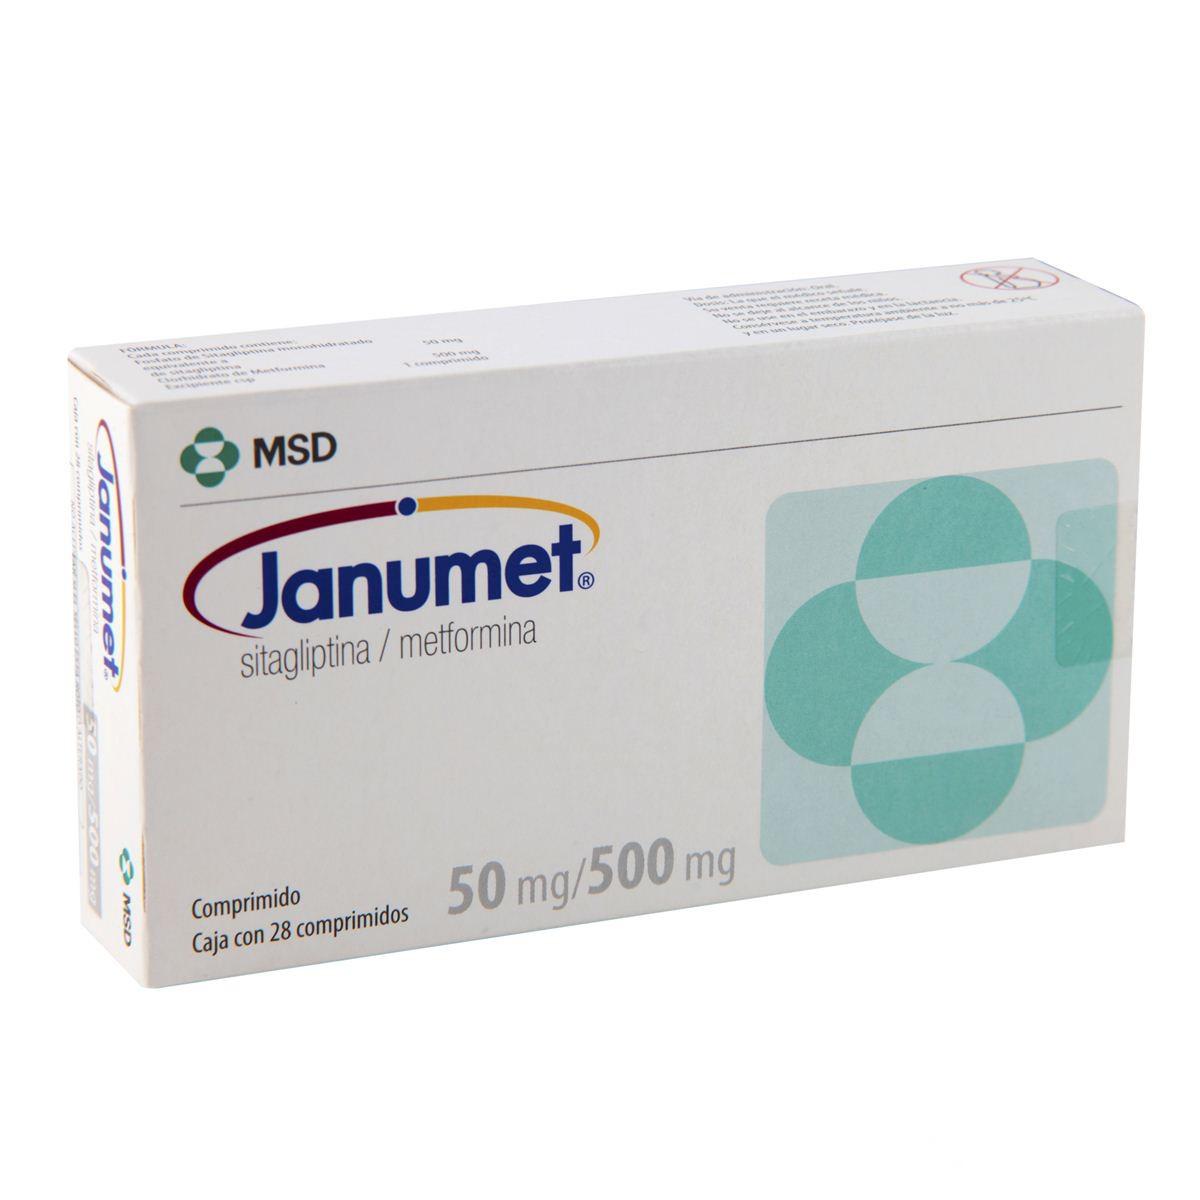 Janumet 50mg/500mg (Metformin, Sitagliptin) MSD (H/28v)